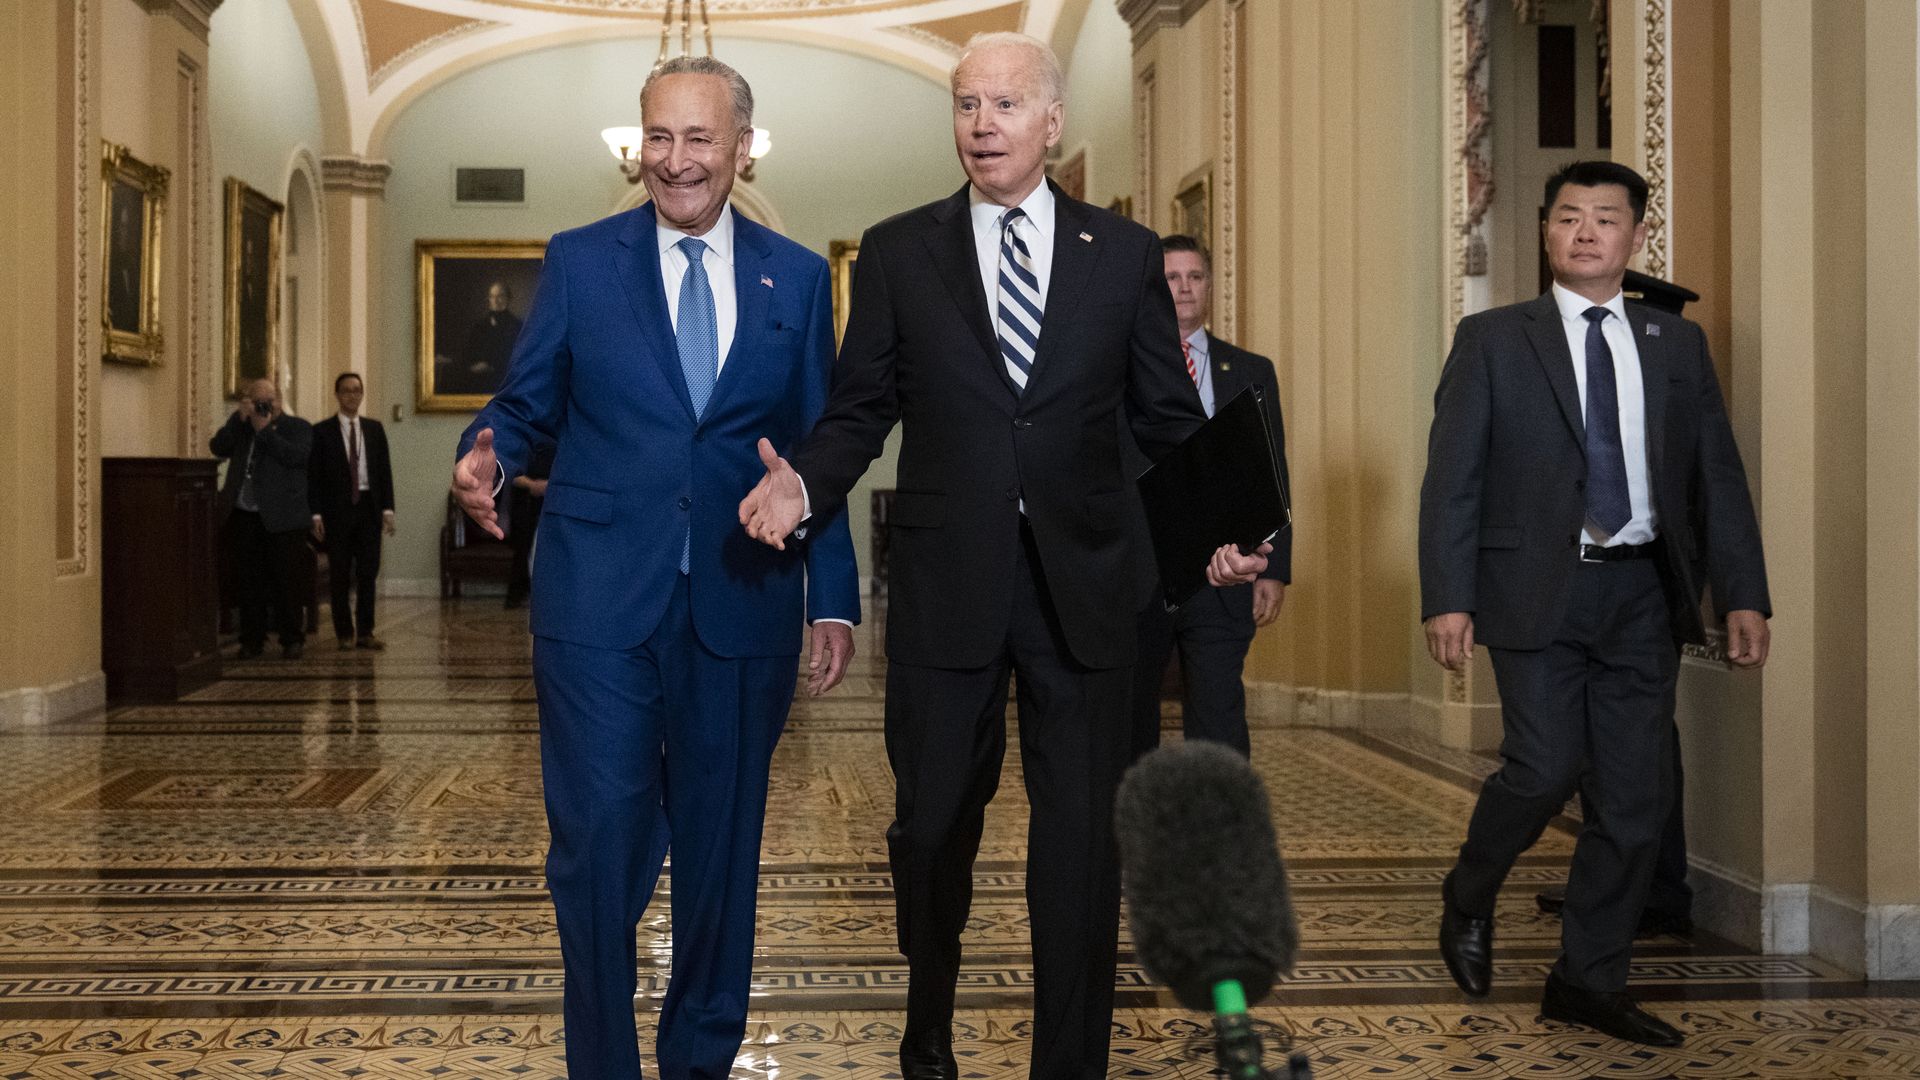 President Joe Biden and Senator Chuck Schumer seen in the Senate.